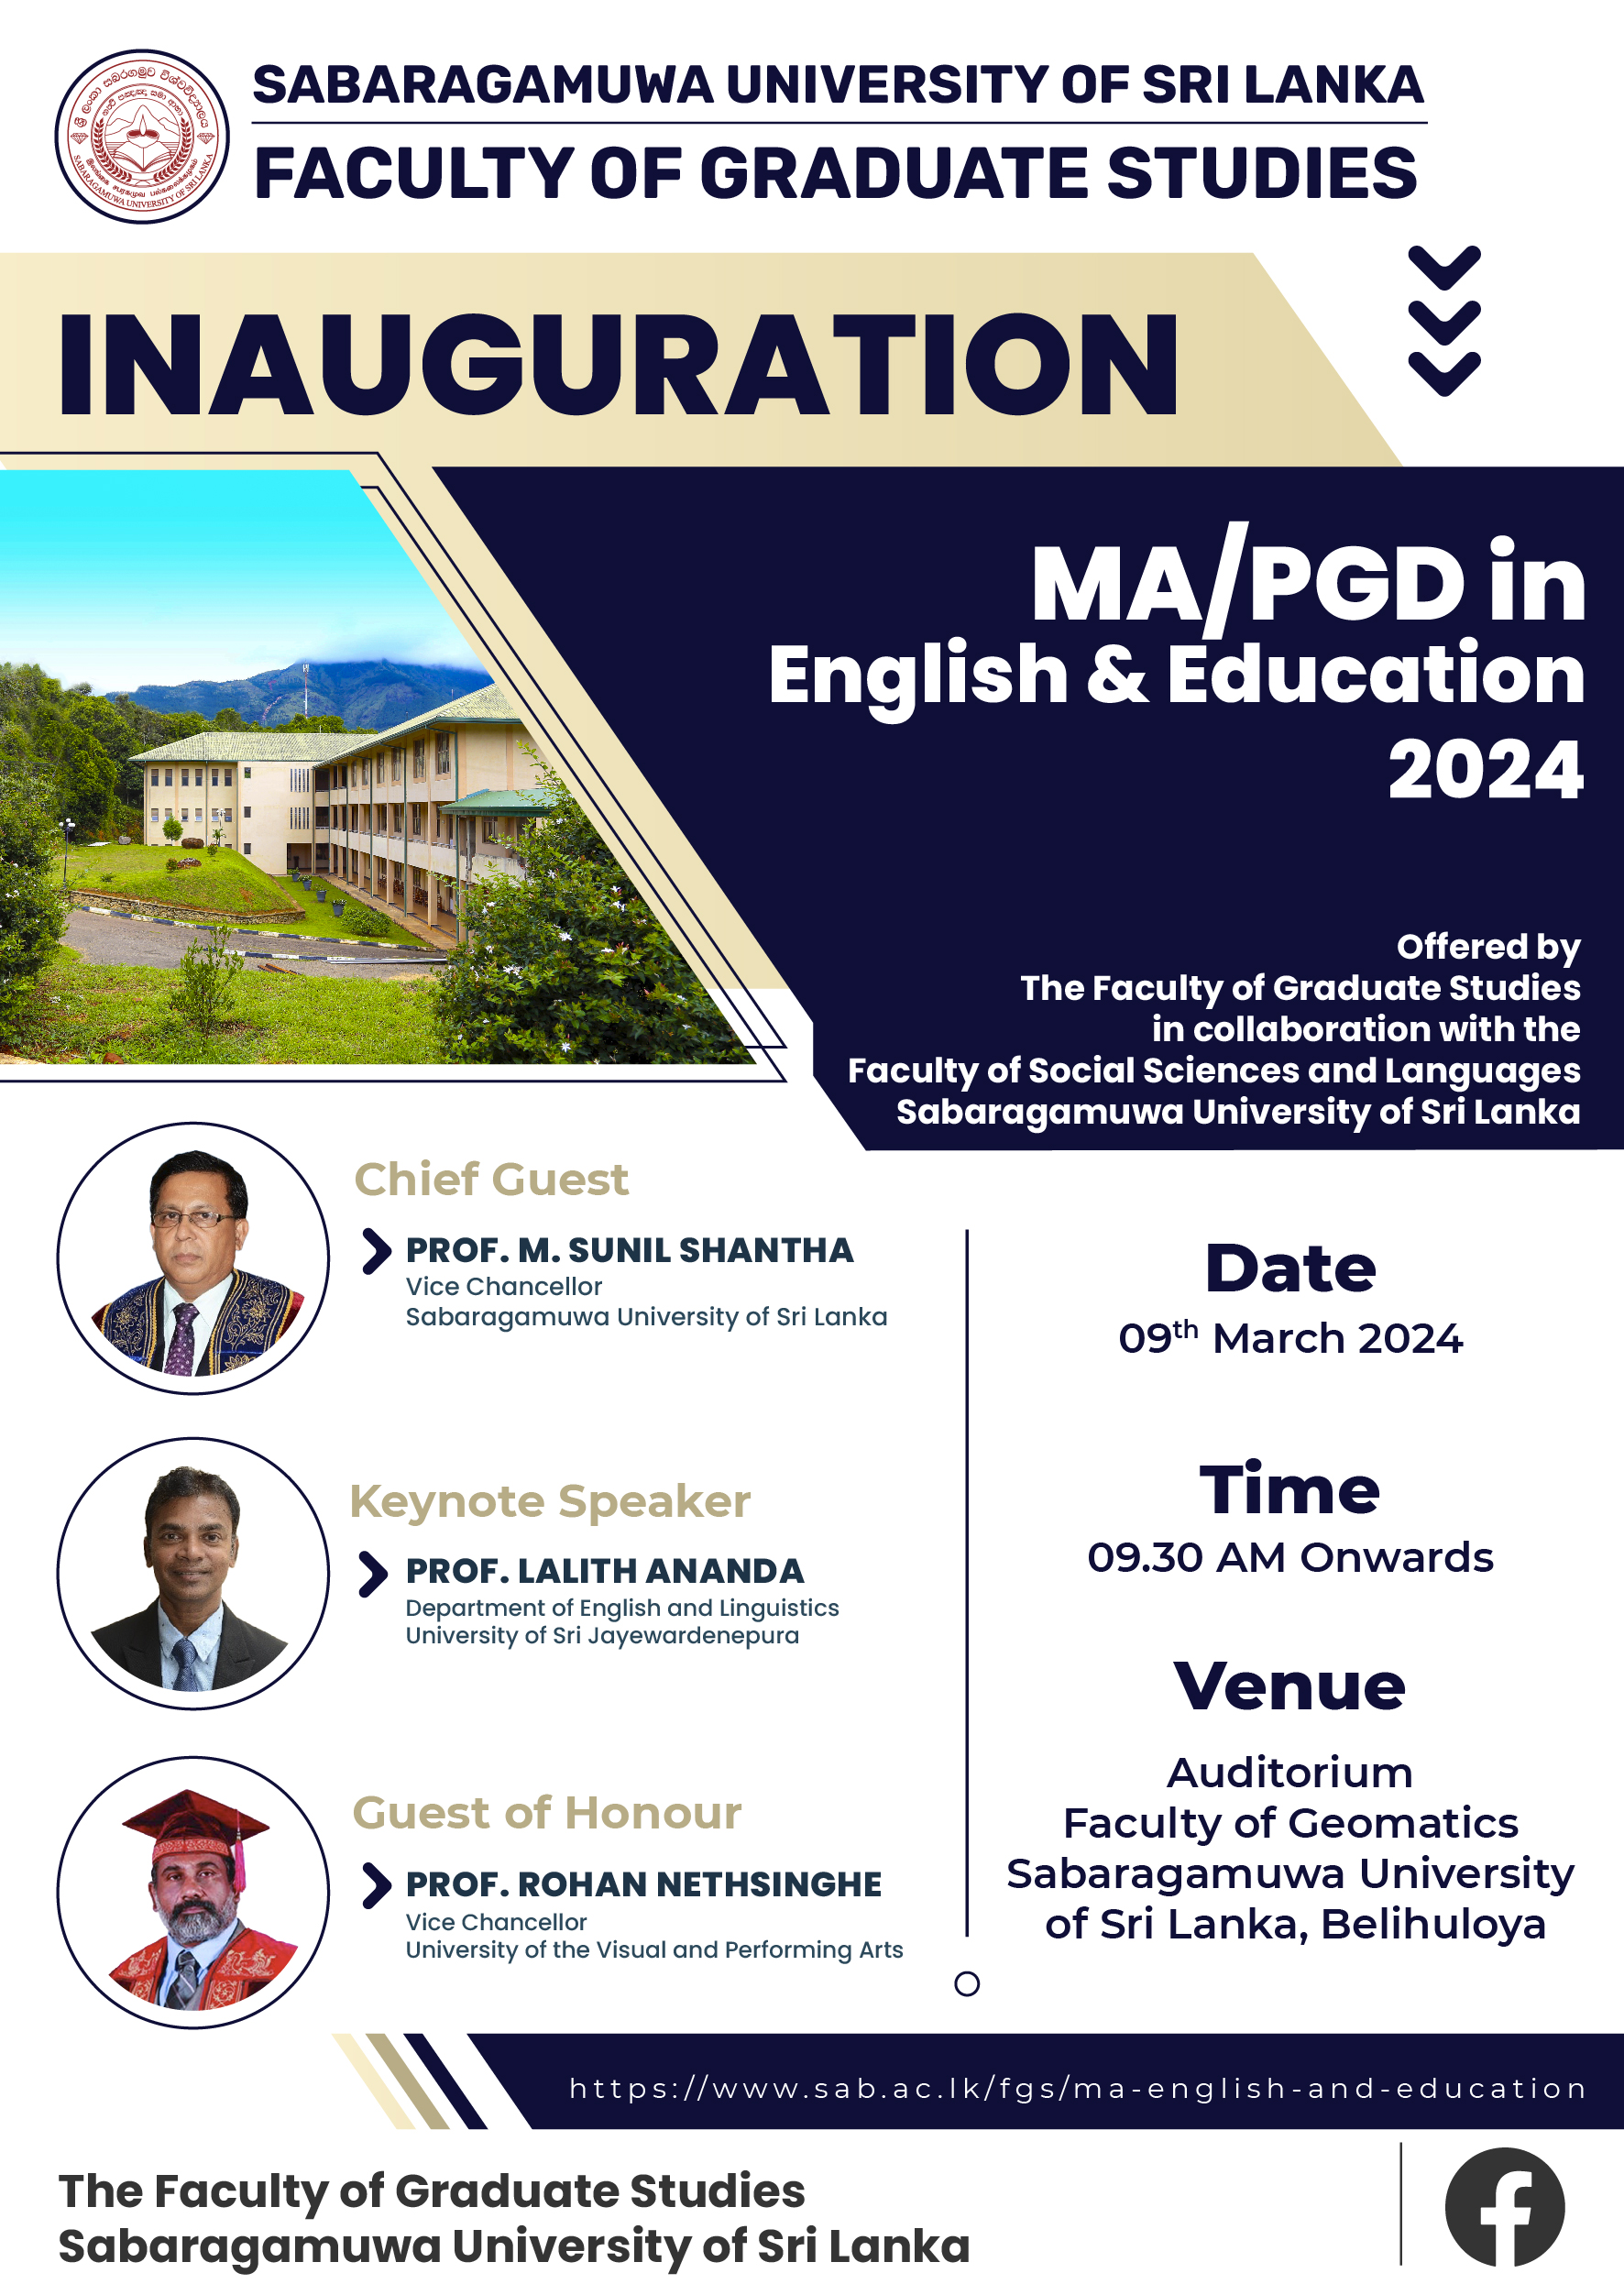 Inauguration of the MA/PGD in English & Education - 2024